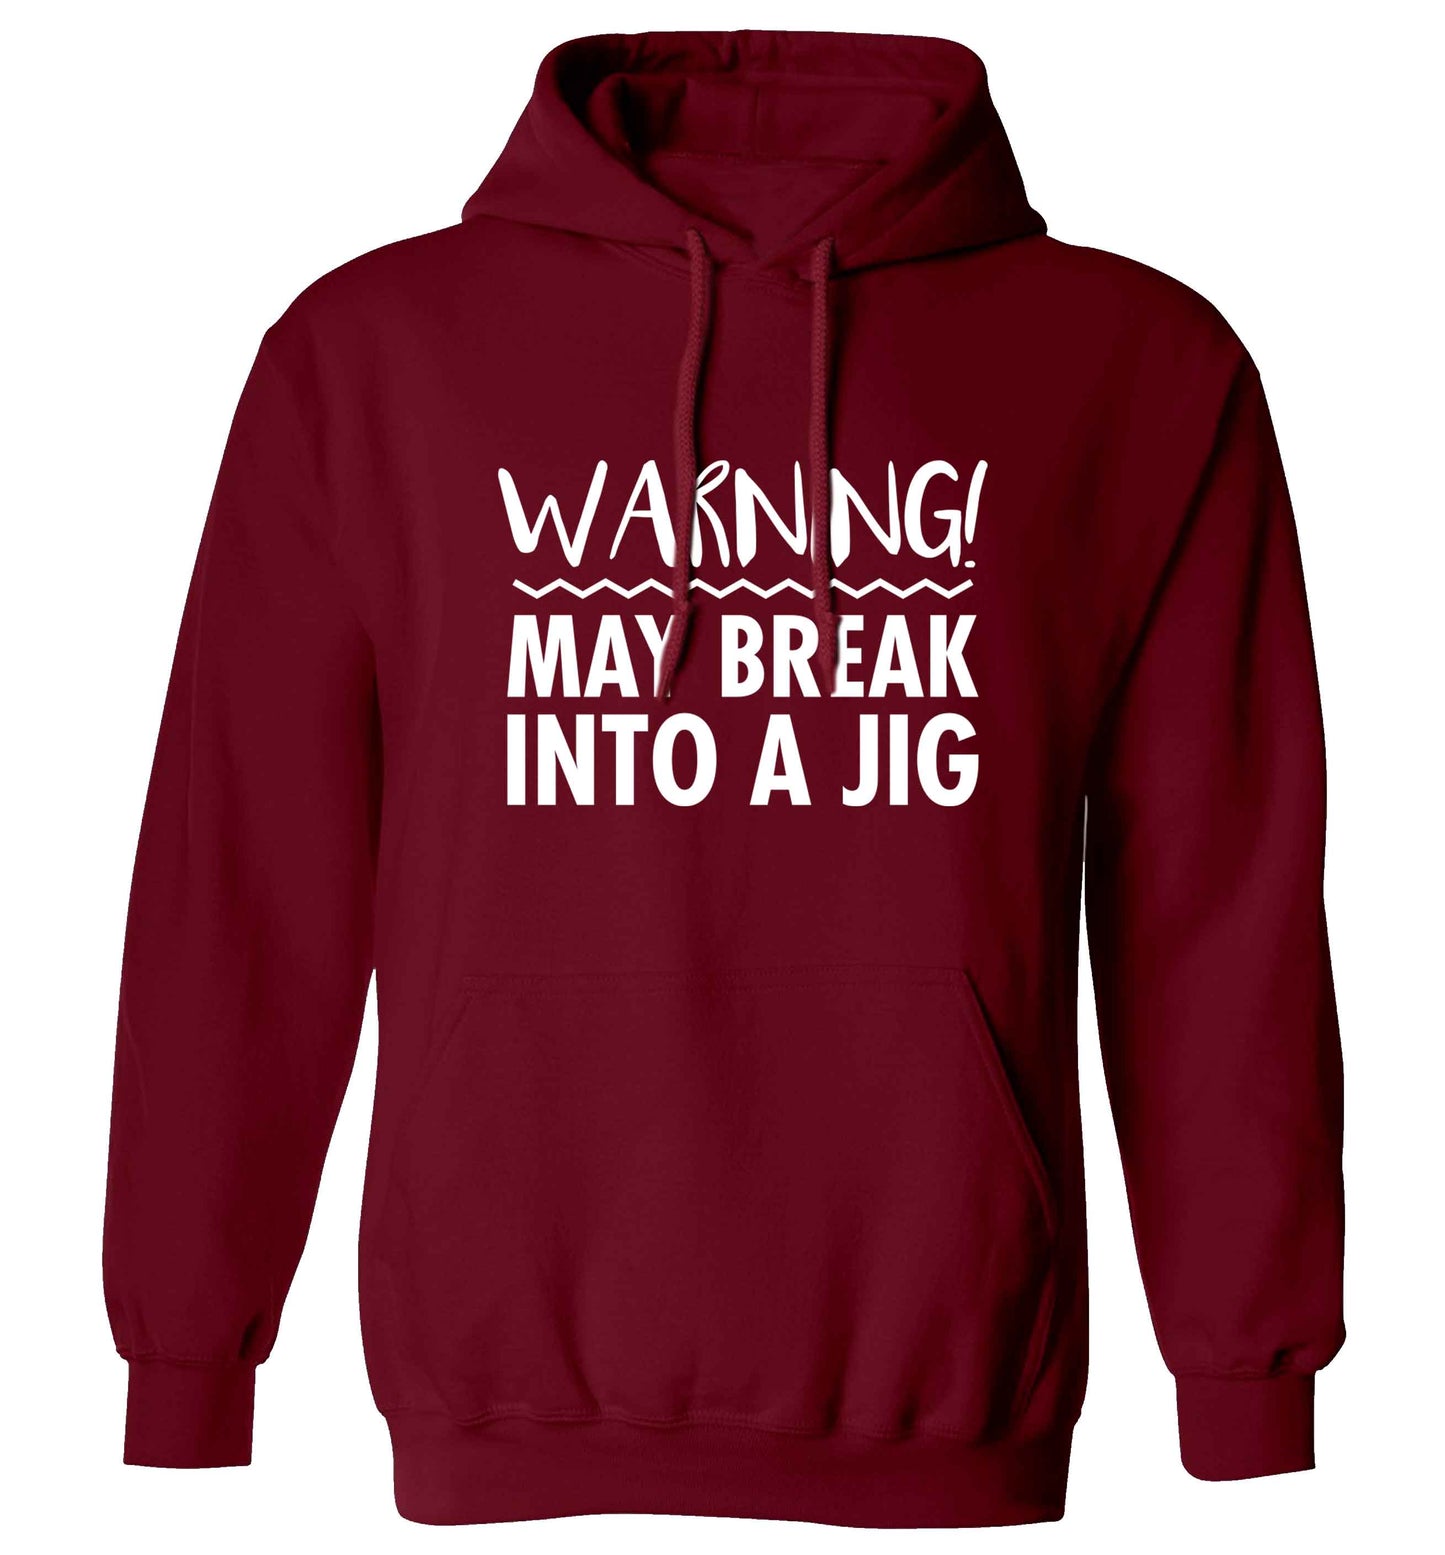 Warning may break into a jig adults unisex maroon hoodie 2XL